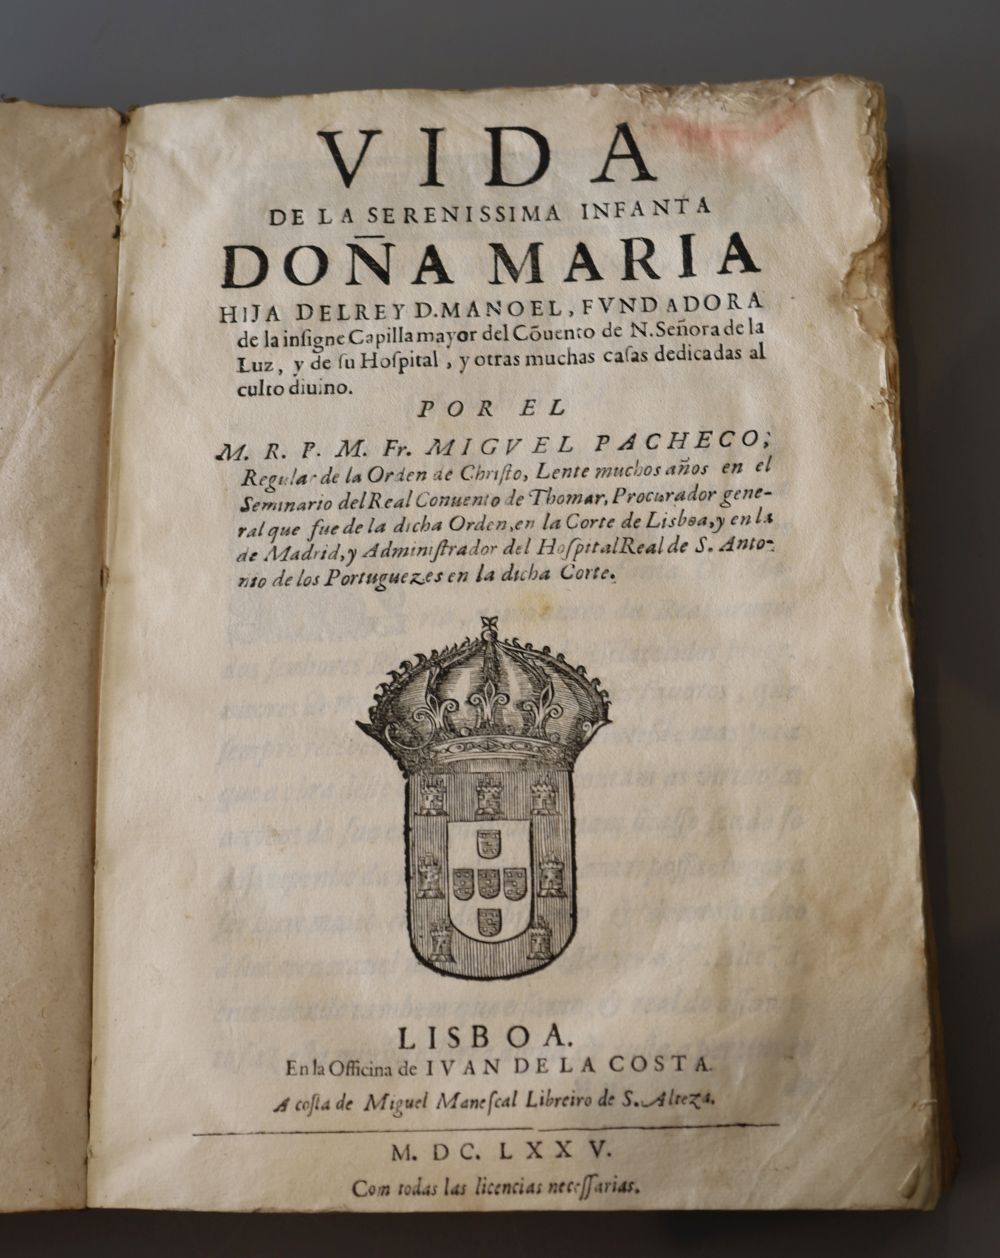 Pacheco, Miguel - Vida de la serenissima infanta dona maria, limp vellum, quarto, early leaves to top right corner ragged, loss to limp